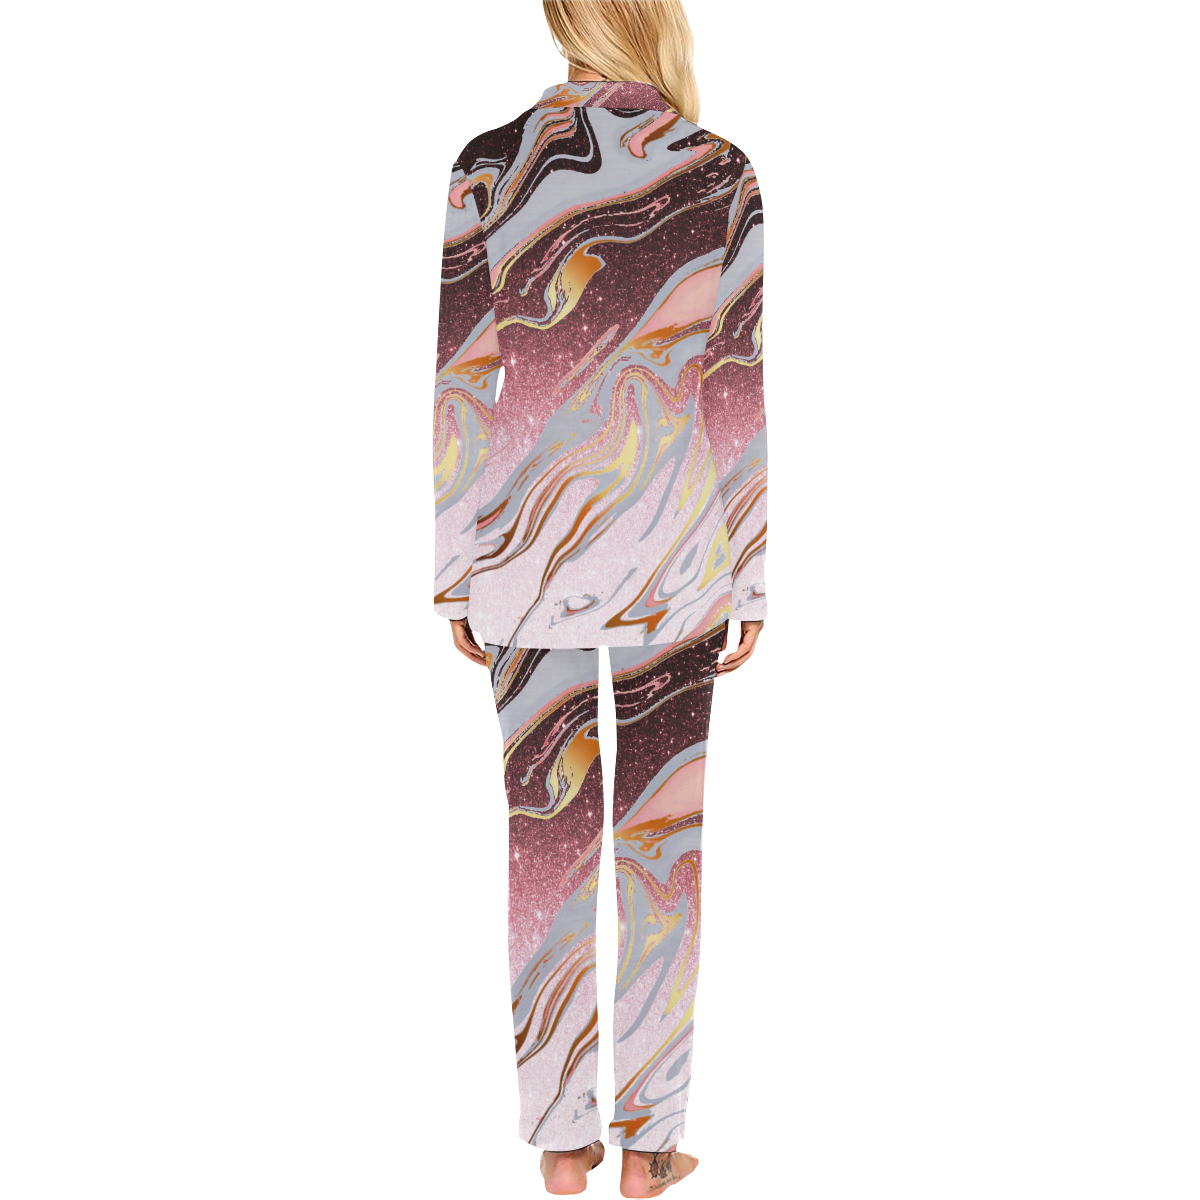 Rose gold glitter marble Women's Long Pajama Set